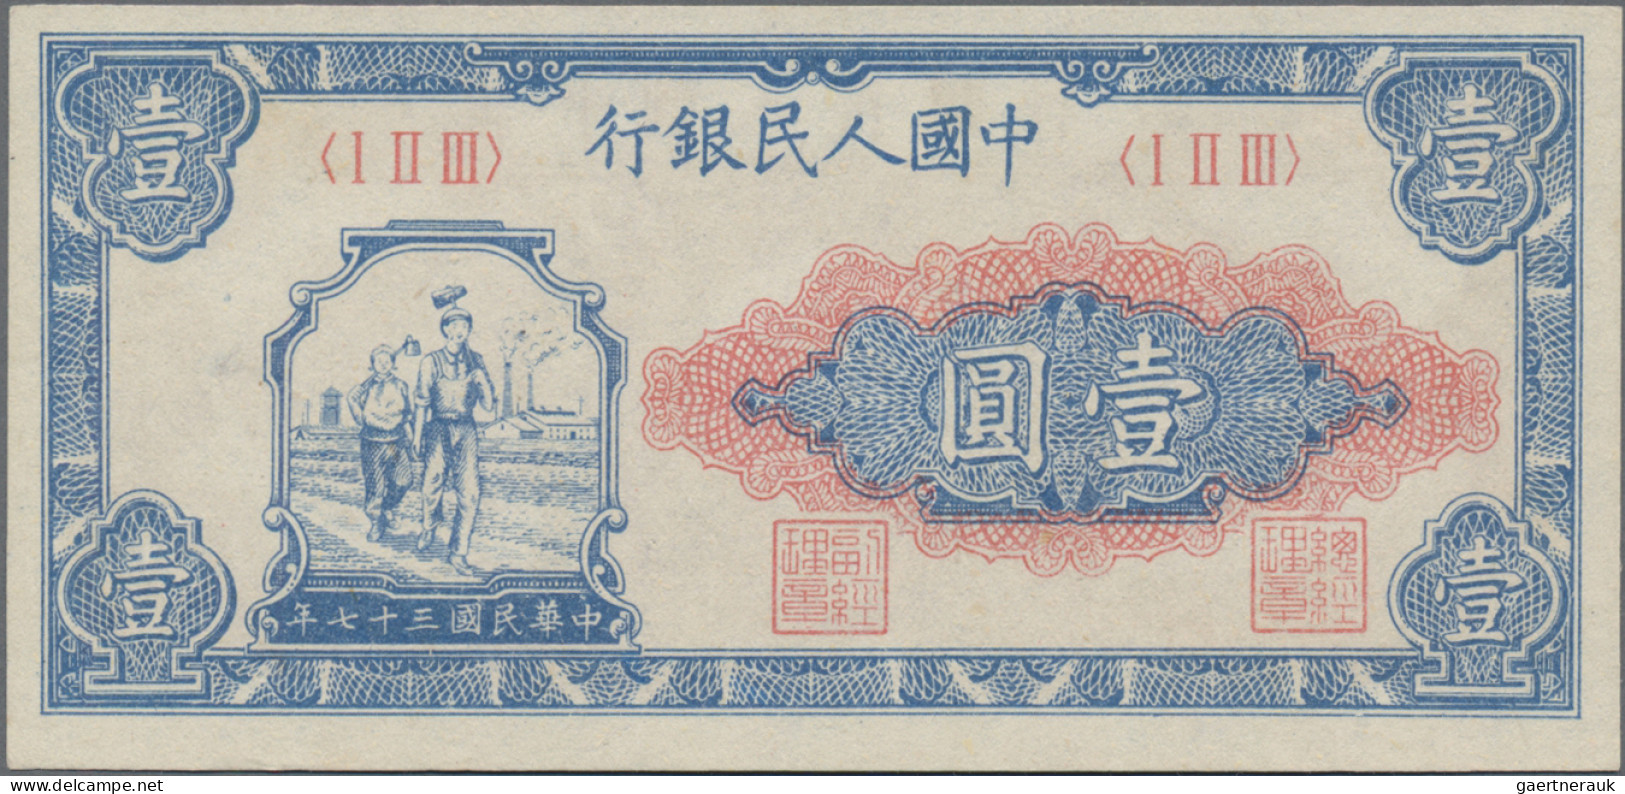 China: Peoples Bank Of China, First Series Renminbi 1948, 1 Yuan, P.800, Waterma - Chine